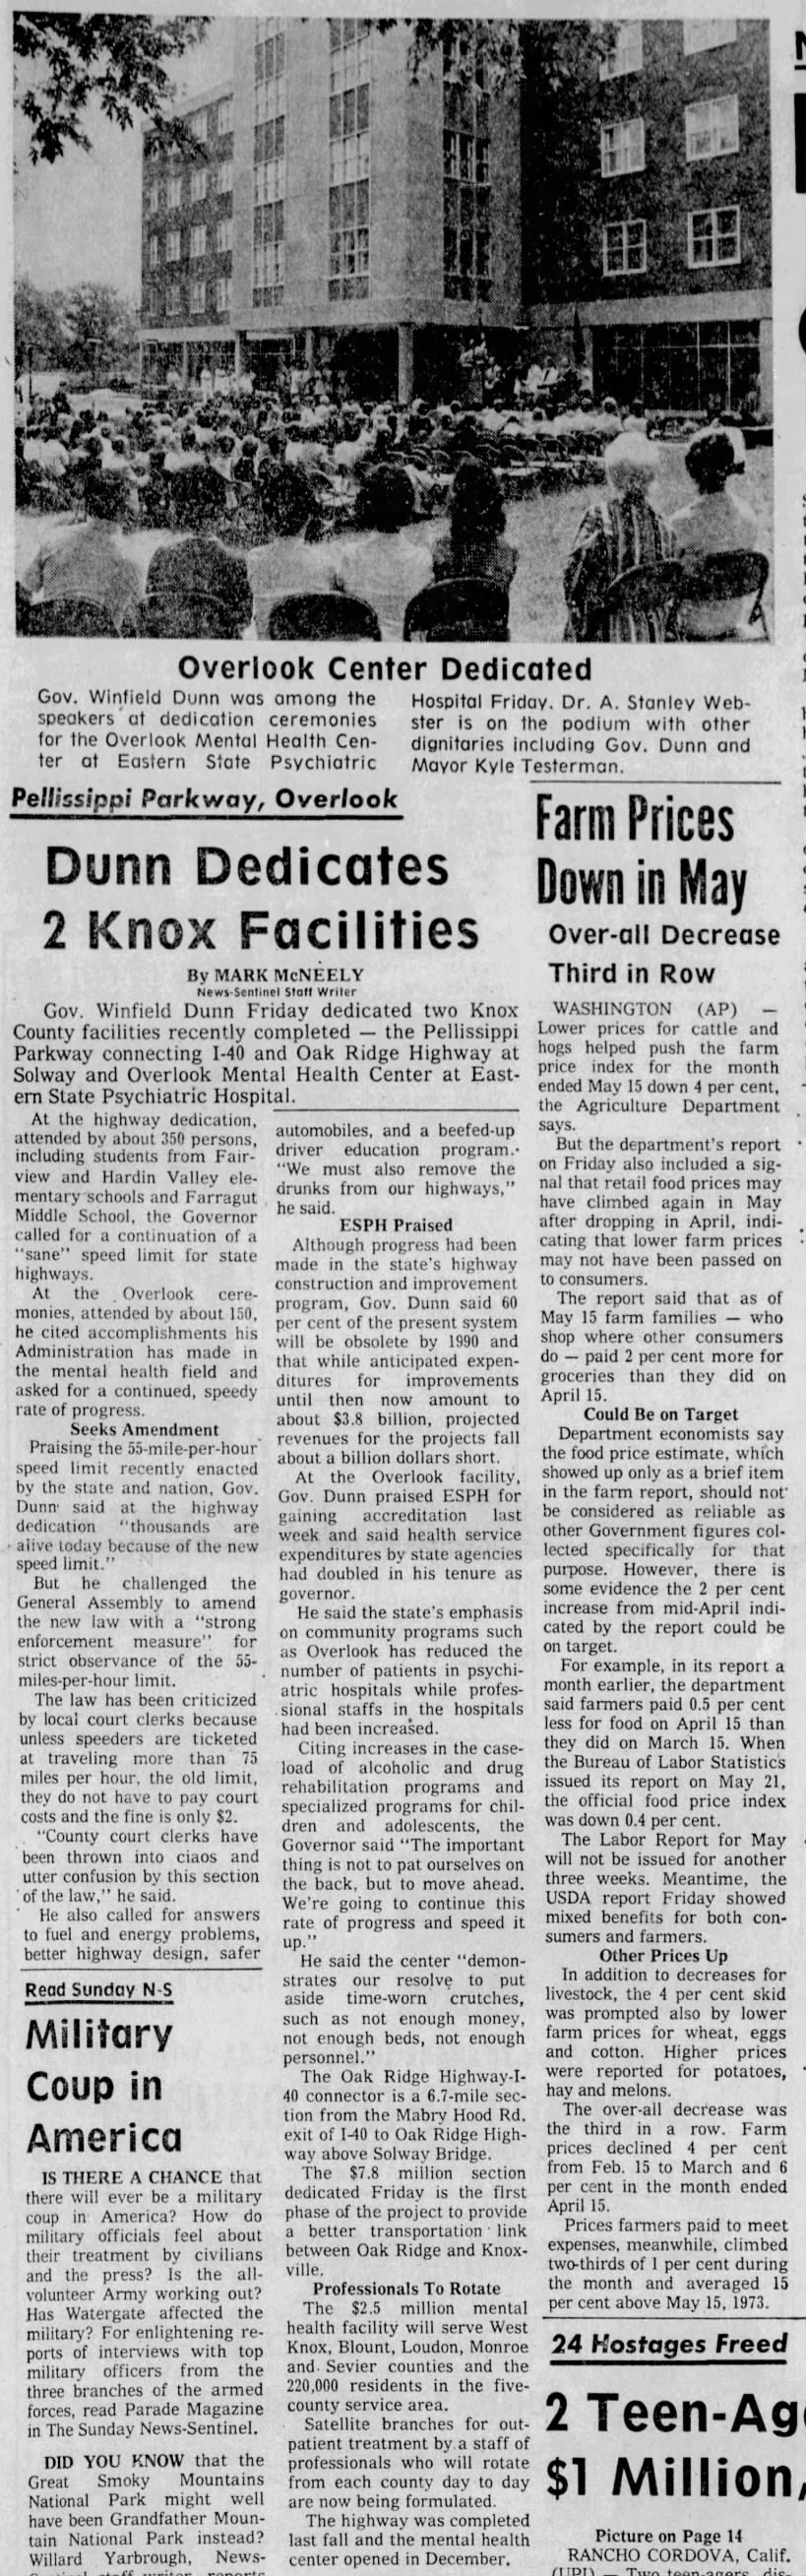 Dunn Dedicates 2 Knox Facilities